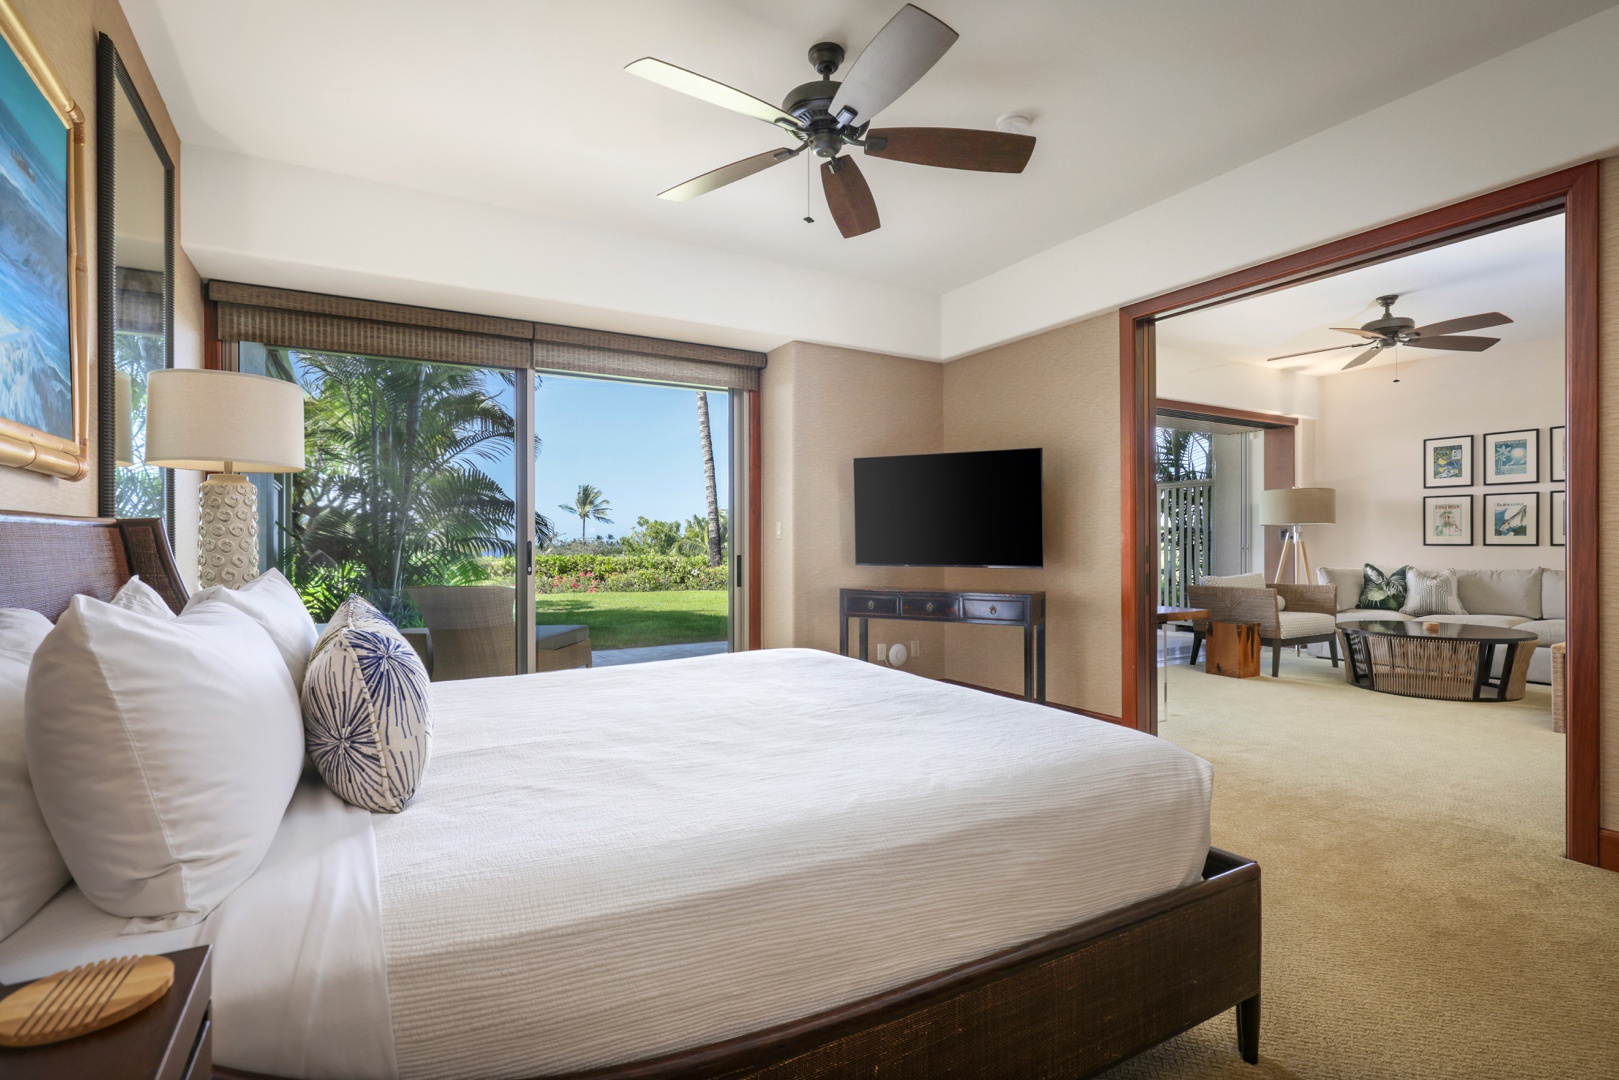 Kailua Kona Vacation Rentals, 3BD Ke Alaula Villa (210B) at Four Seasons Resort at Hualalai - View from primary bedroom suite toward deck and bonus room.